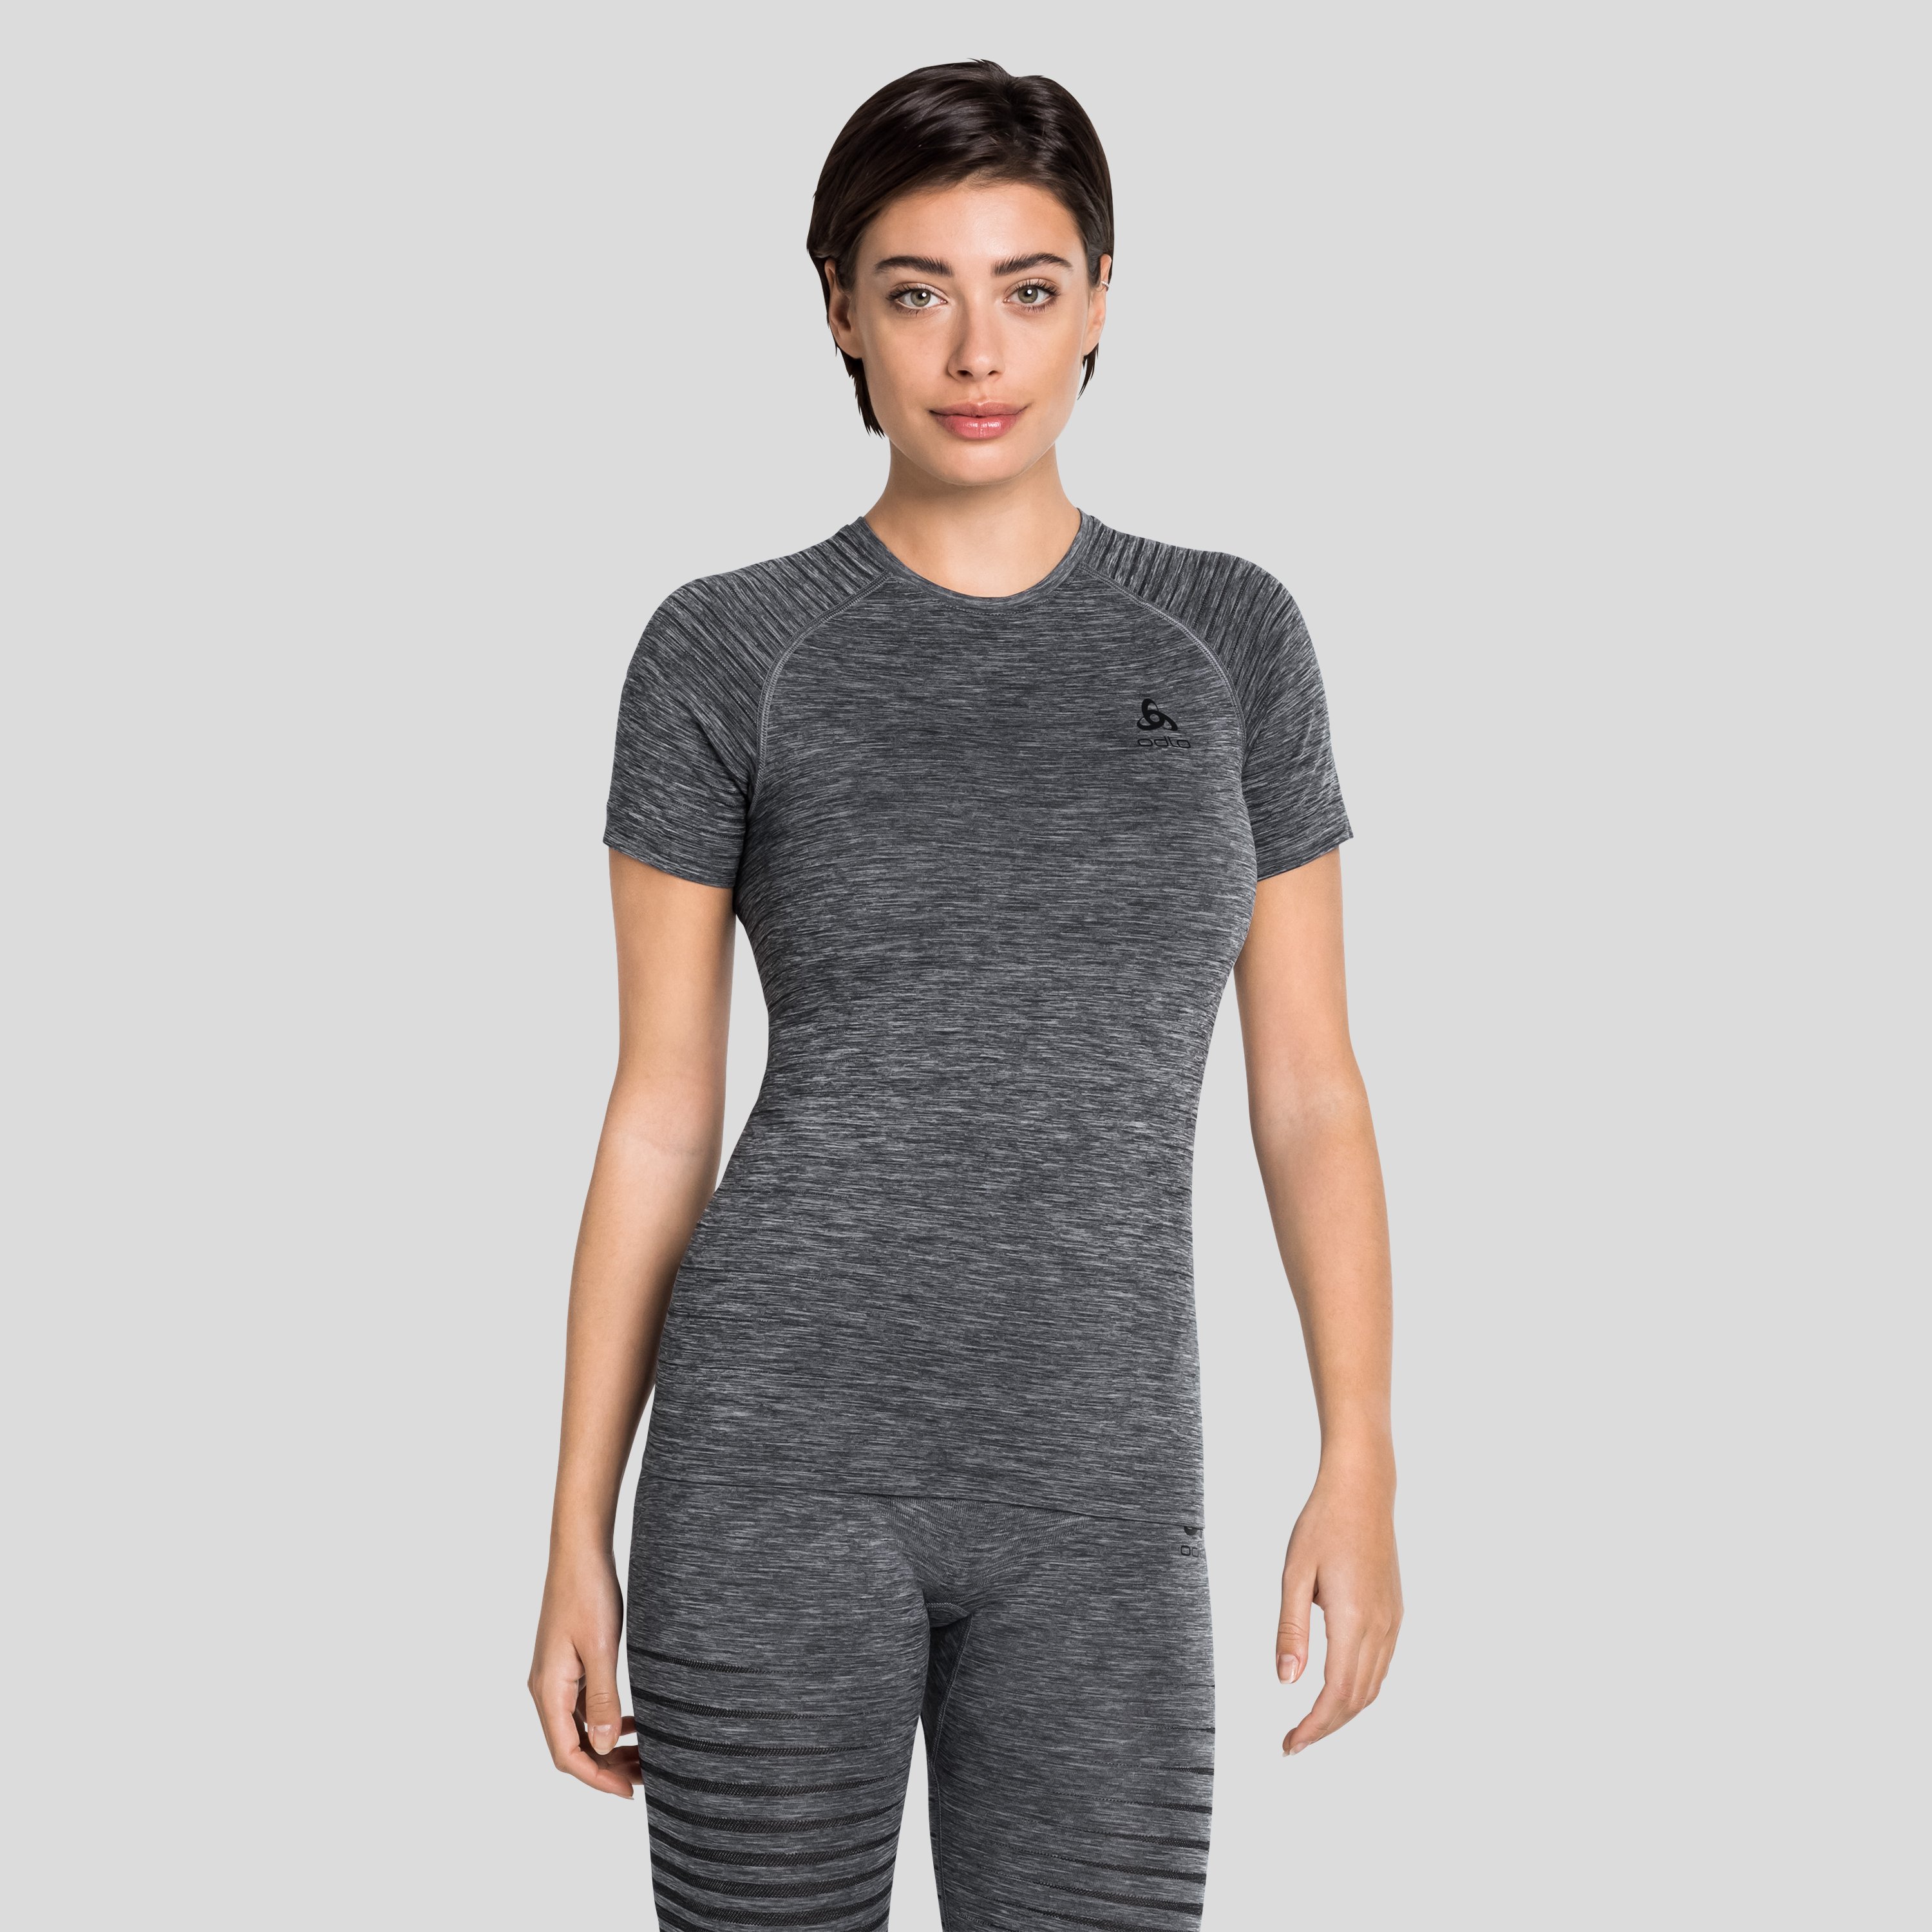 ODLO Performance Light Base Layer T-Shirt für Damen, L, grau